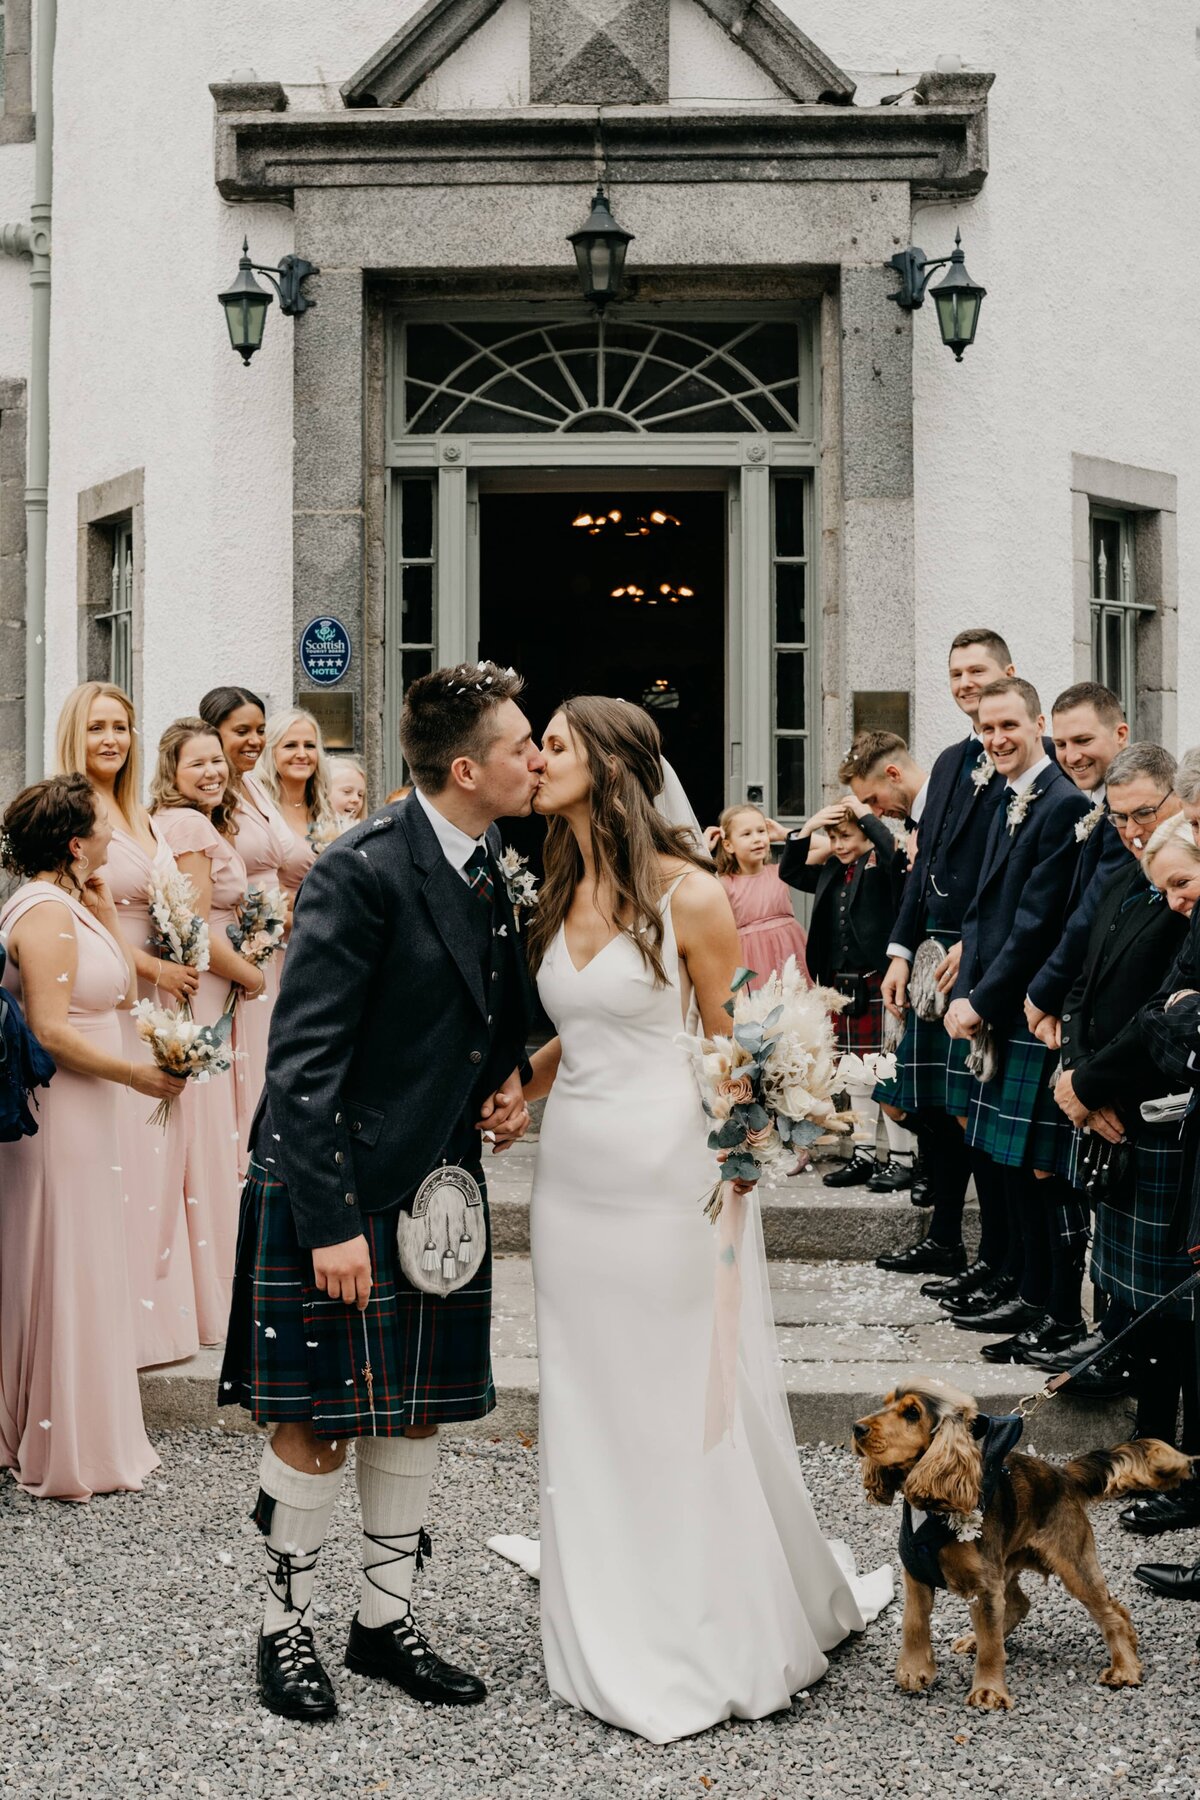 Banchory Lodge wedding photography by Aberdeenshire based wedding photographer Scott Arlow8